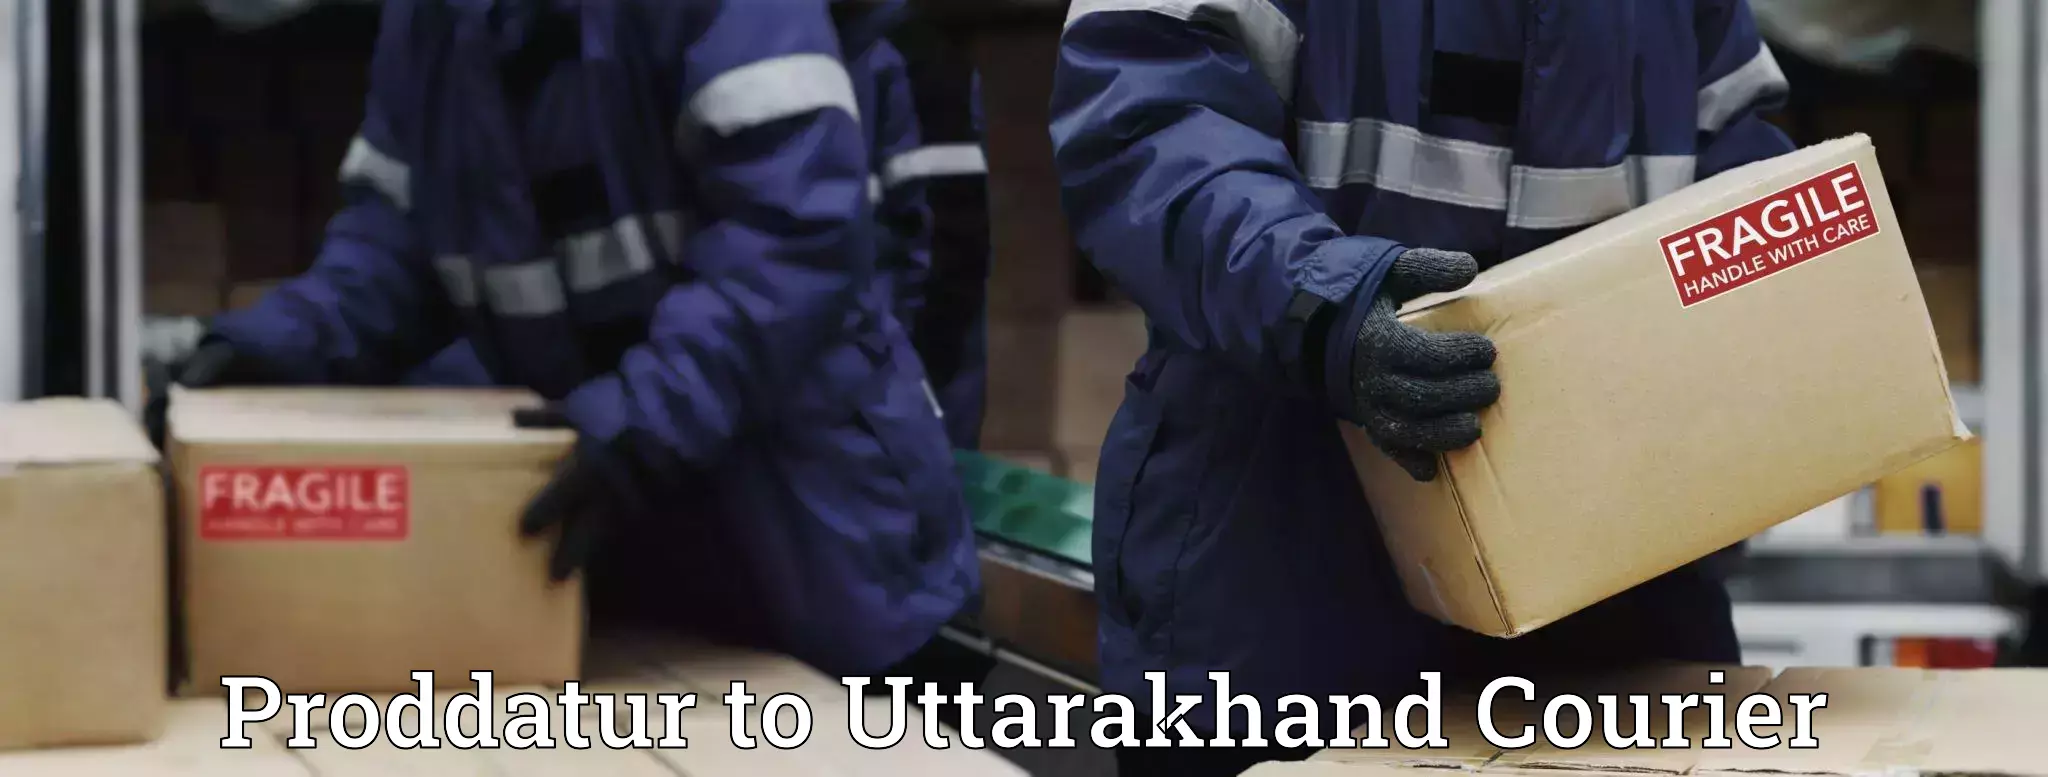 Nationwide delivery network Proddatur to Uttarakhand